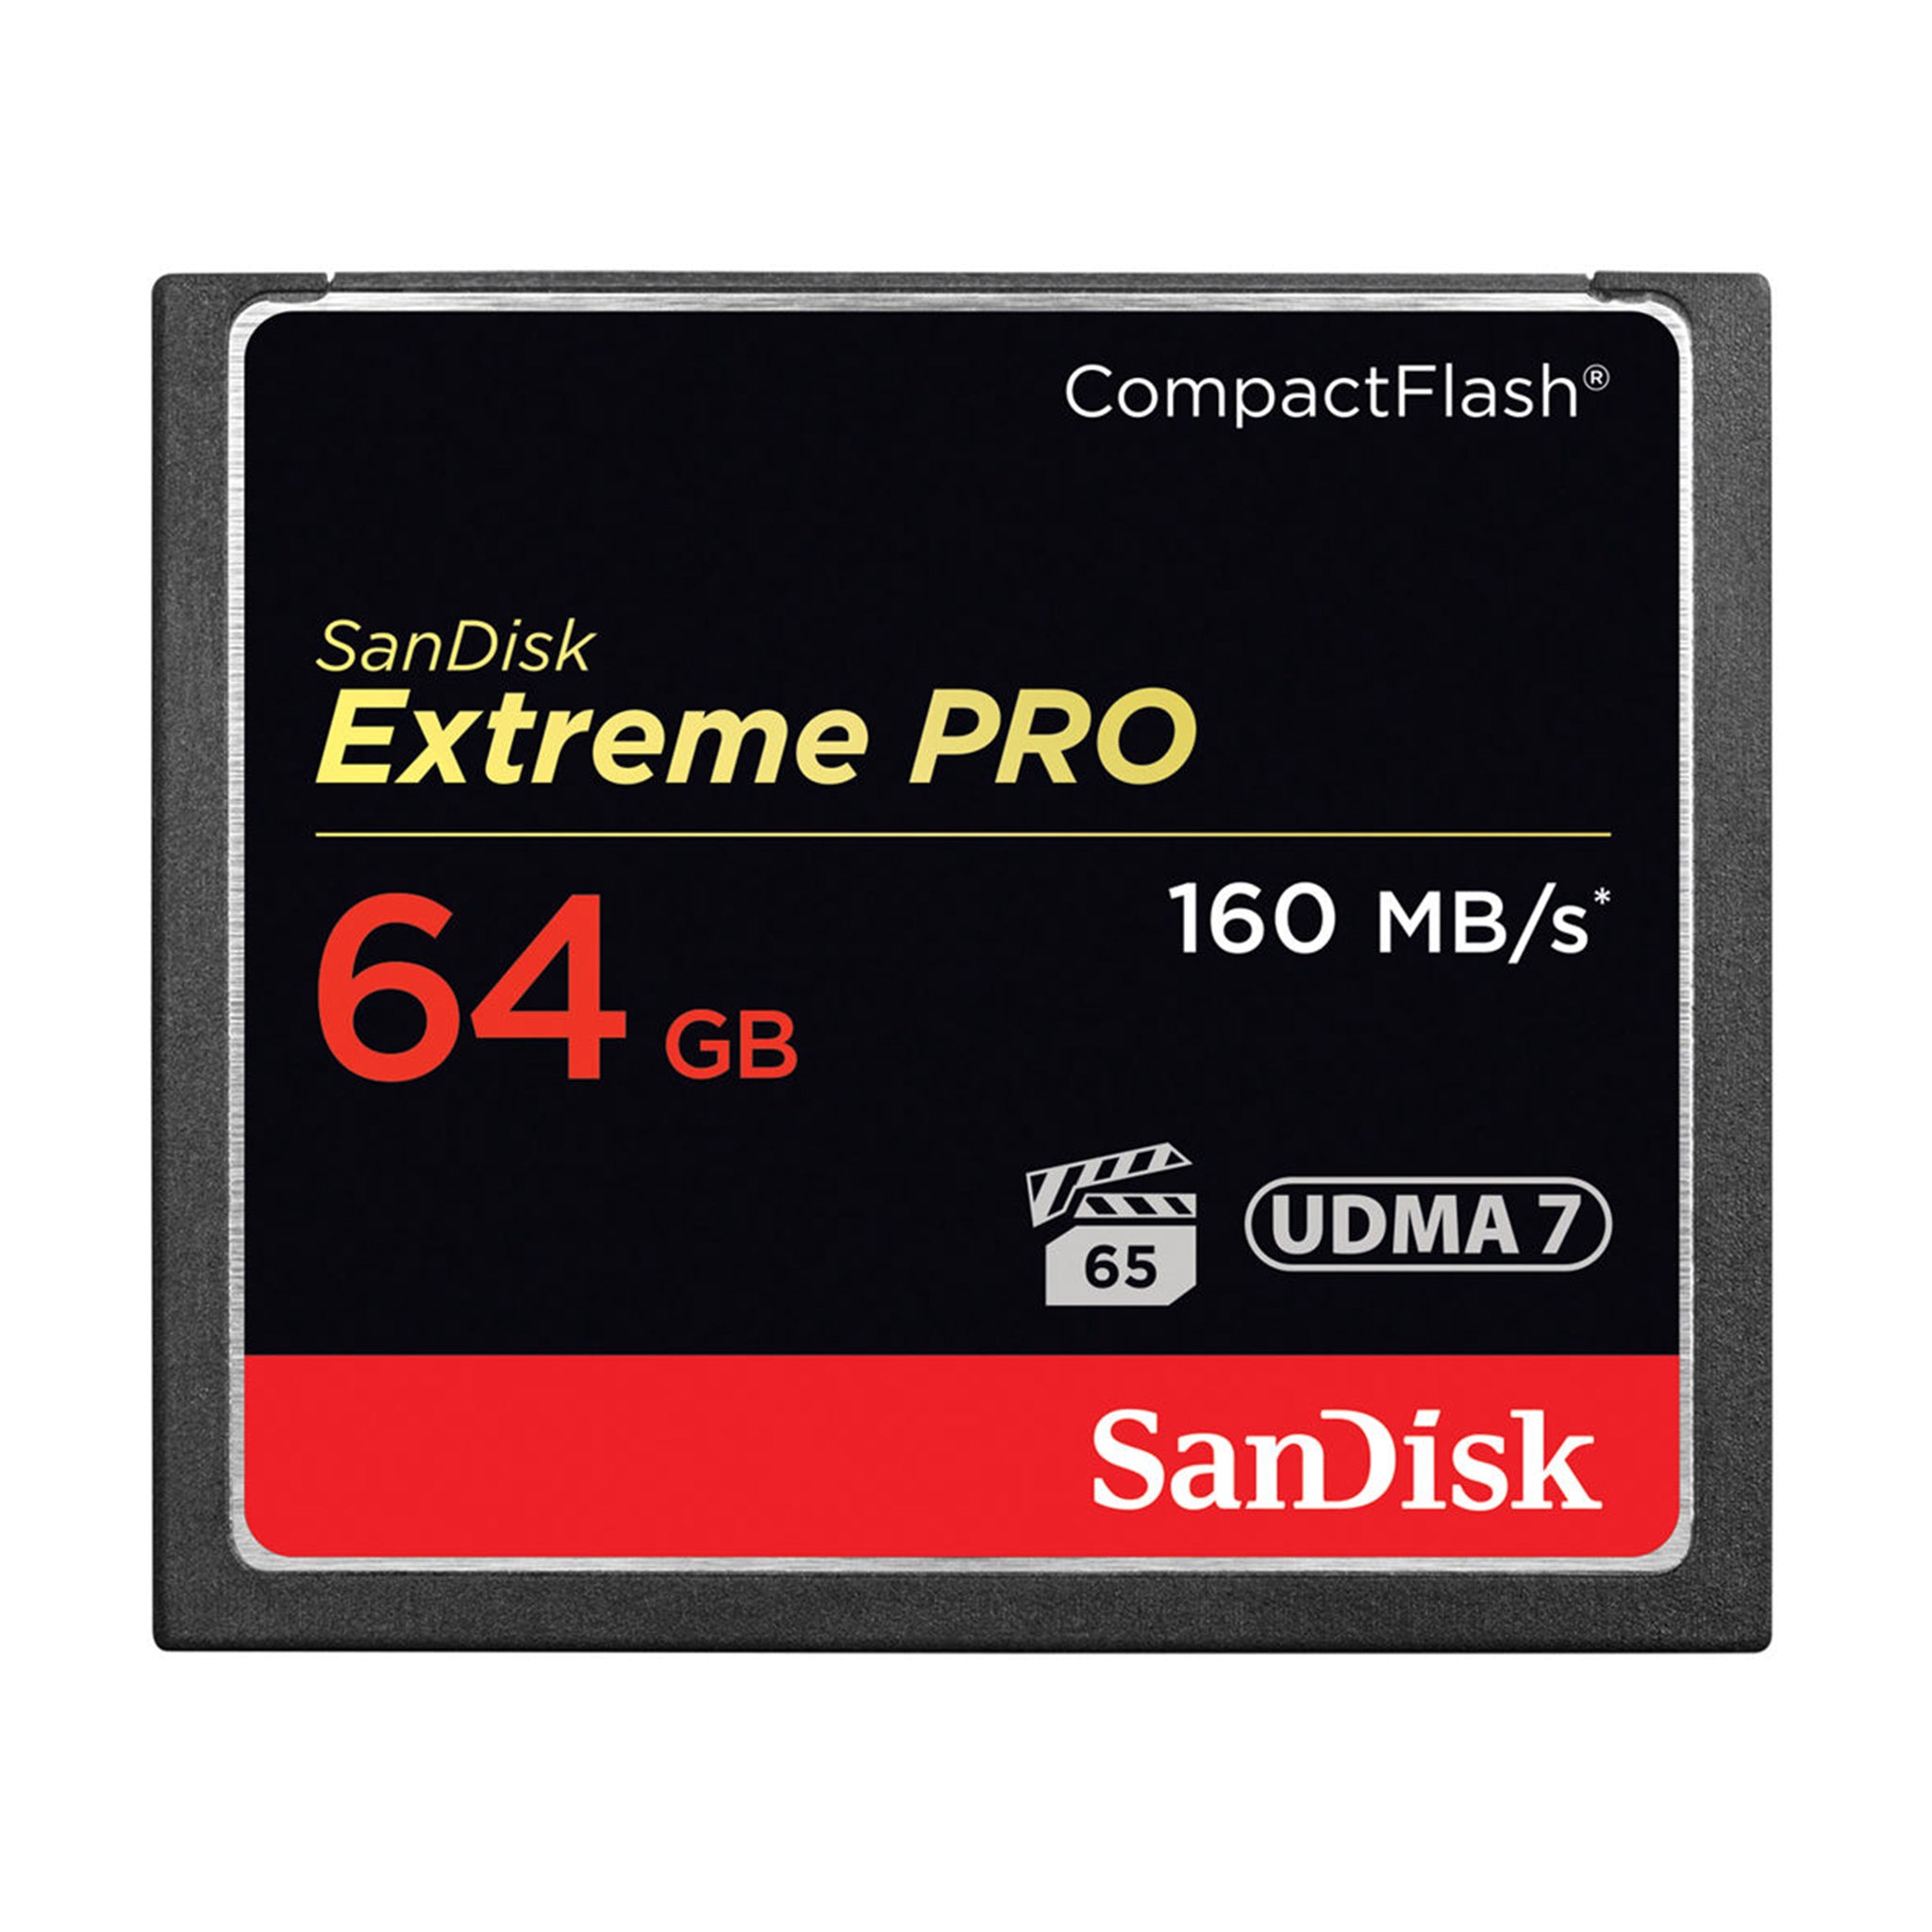 SanDisk 64GB Extreme Pro CF Card